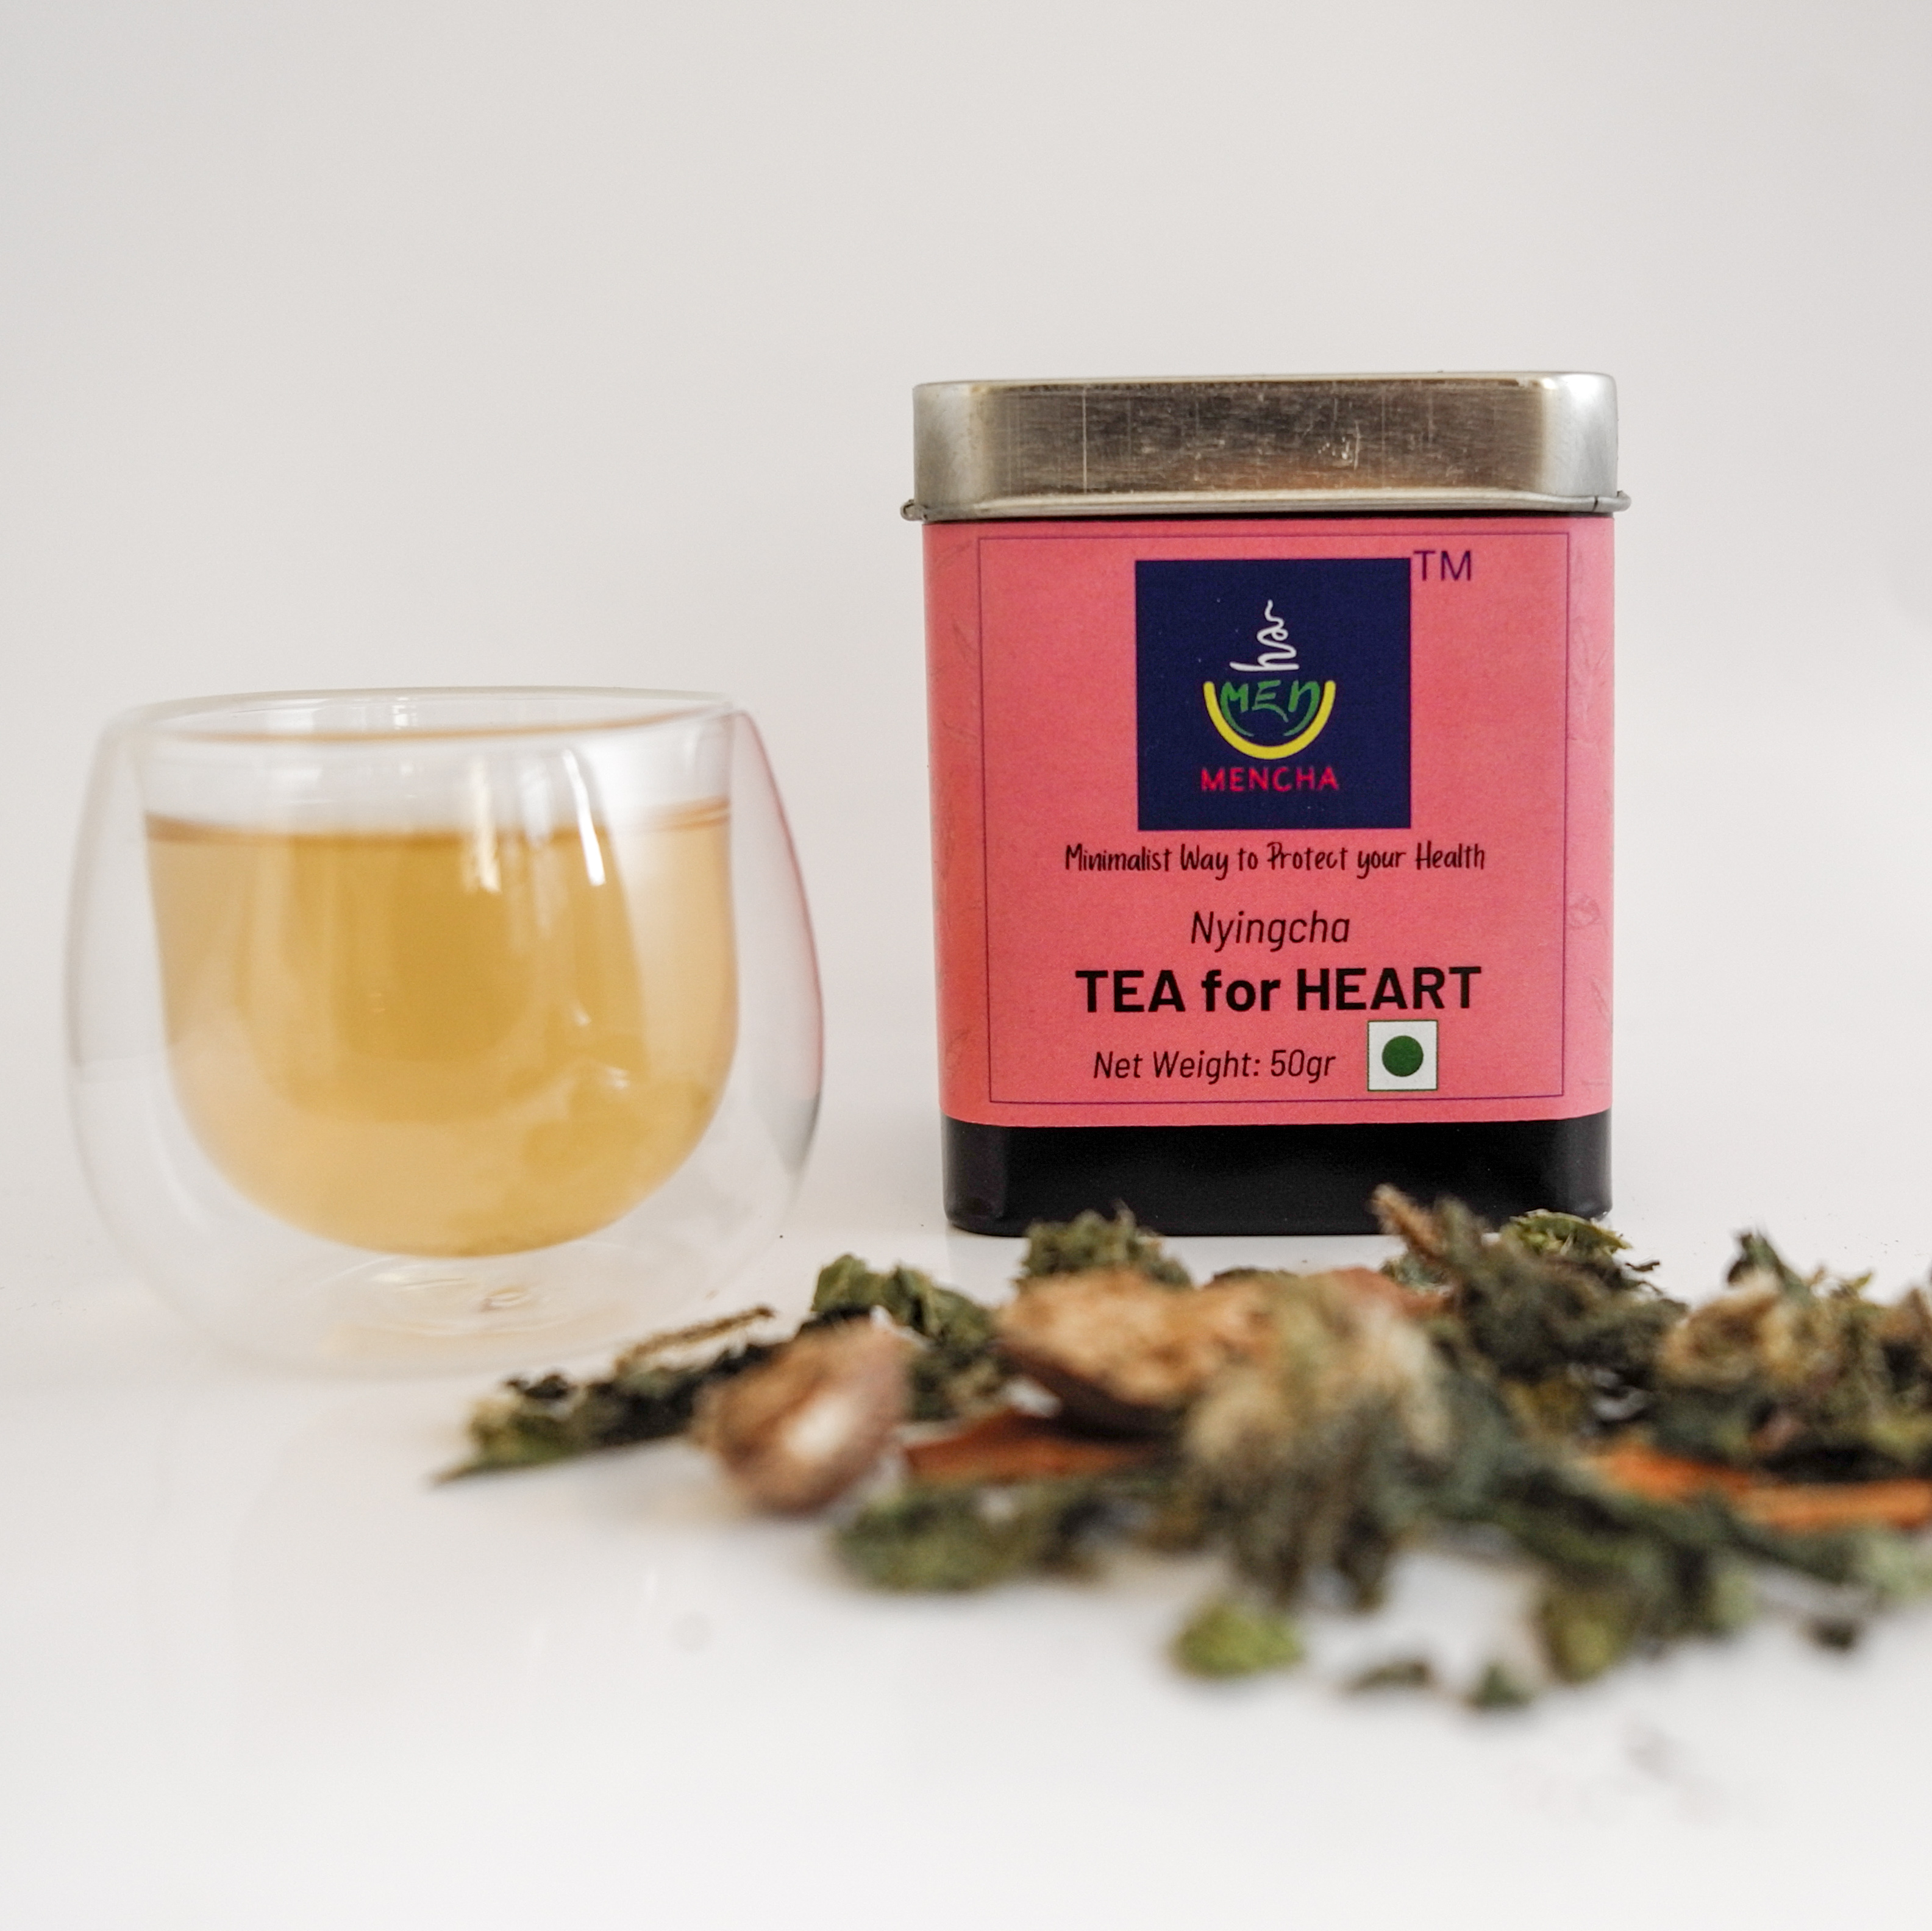 MENCHA - Heart Tea Tin 50gr - Caffeine Free - Himalayan Herbal Blend for Support Heart Health | Help for High Blood Pressure | Antioxidant